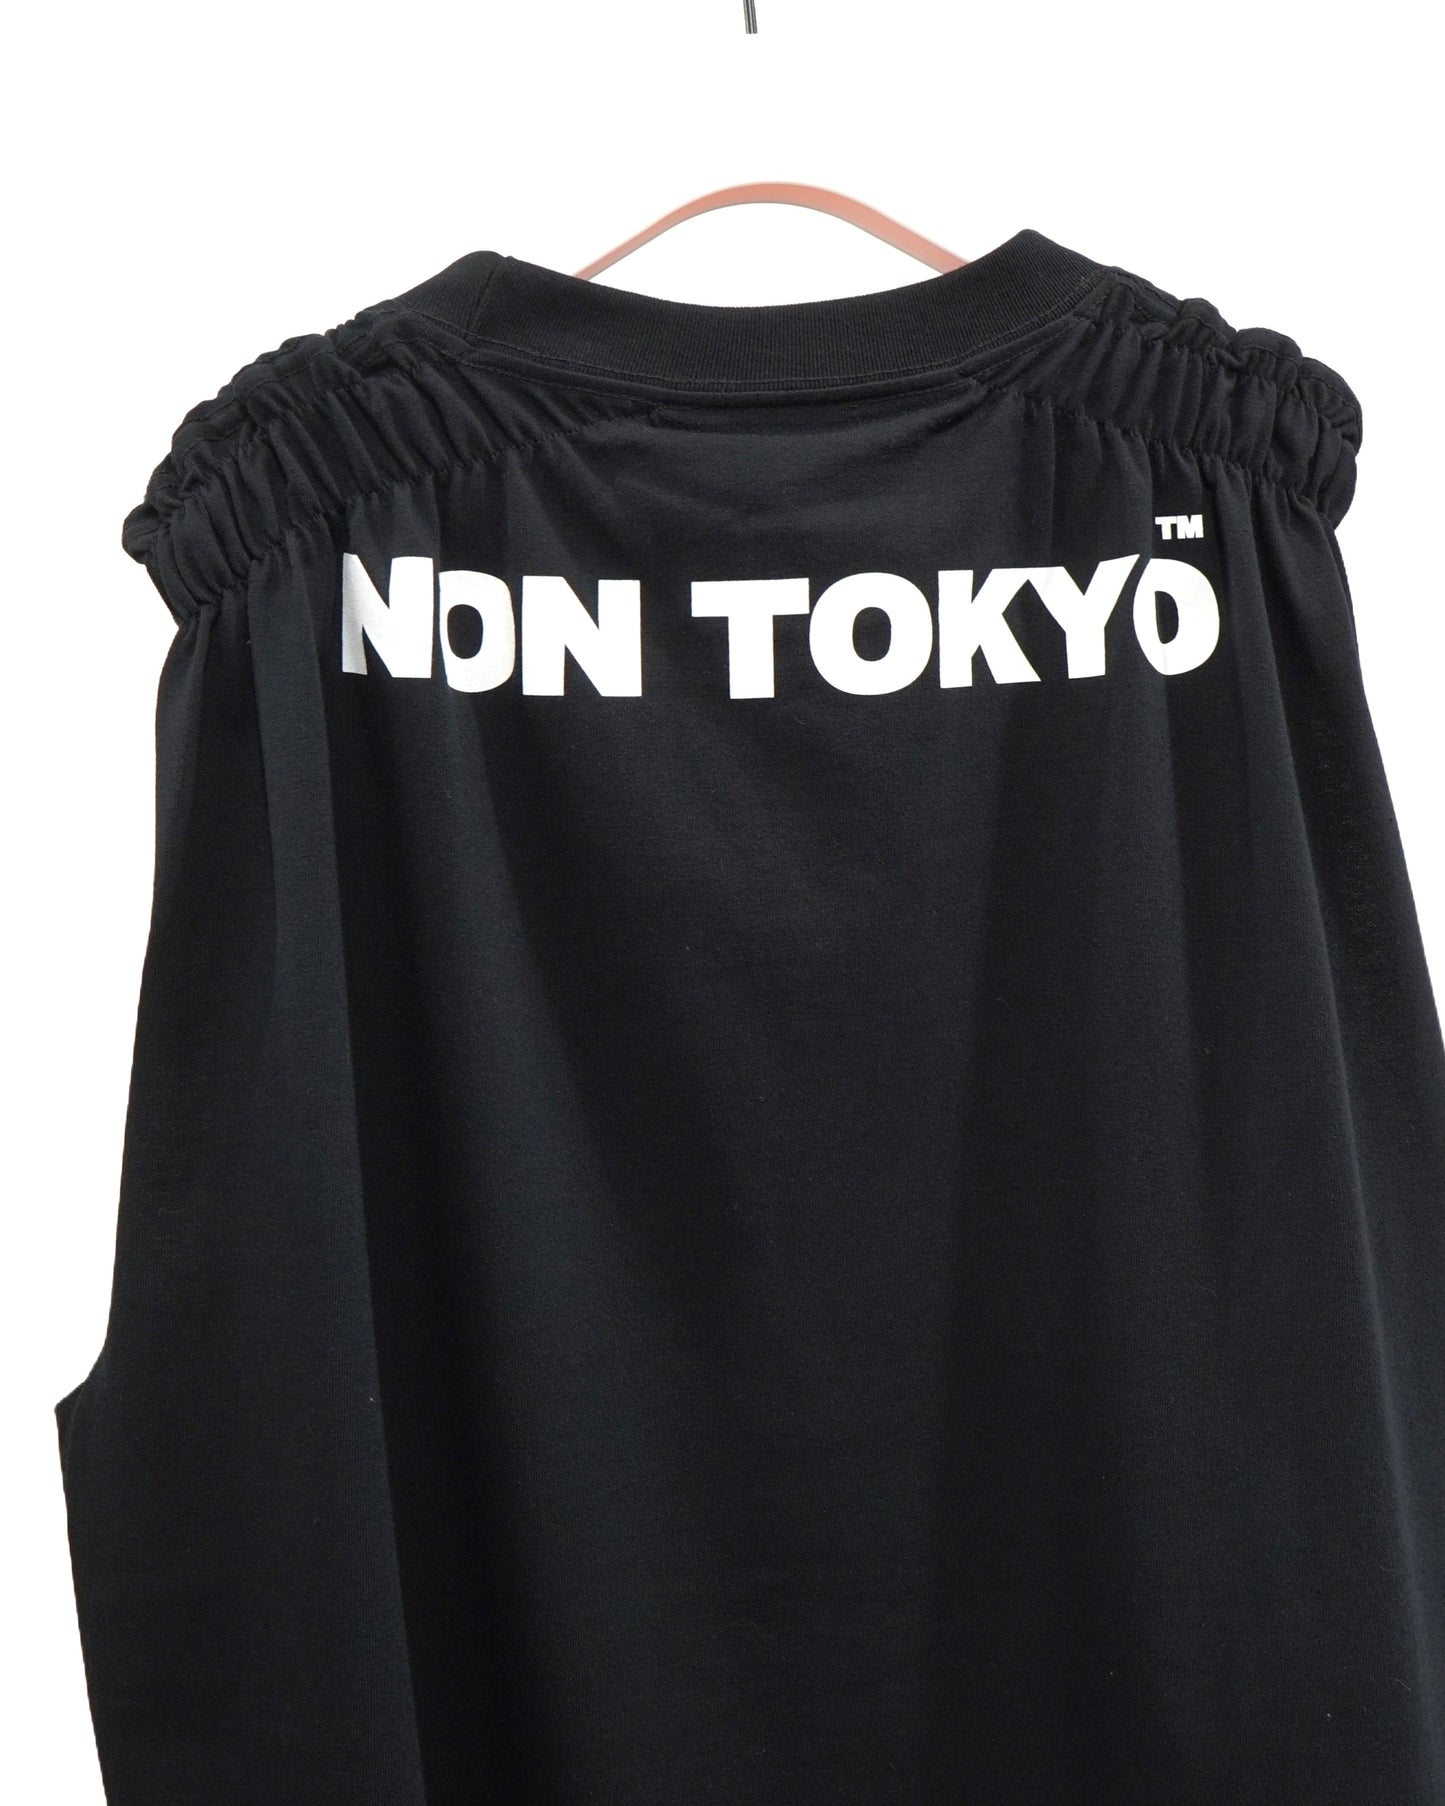 NON TOKYO / GATHER SLEEVE C/S (BASKETBALL/BLACK) / 〈ノントーキョー〉ギャザースリーブカットソー (バスケットボール/ブラック)